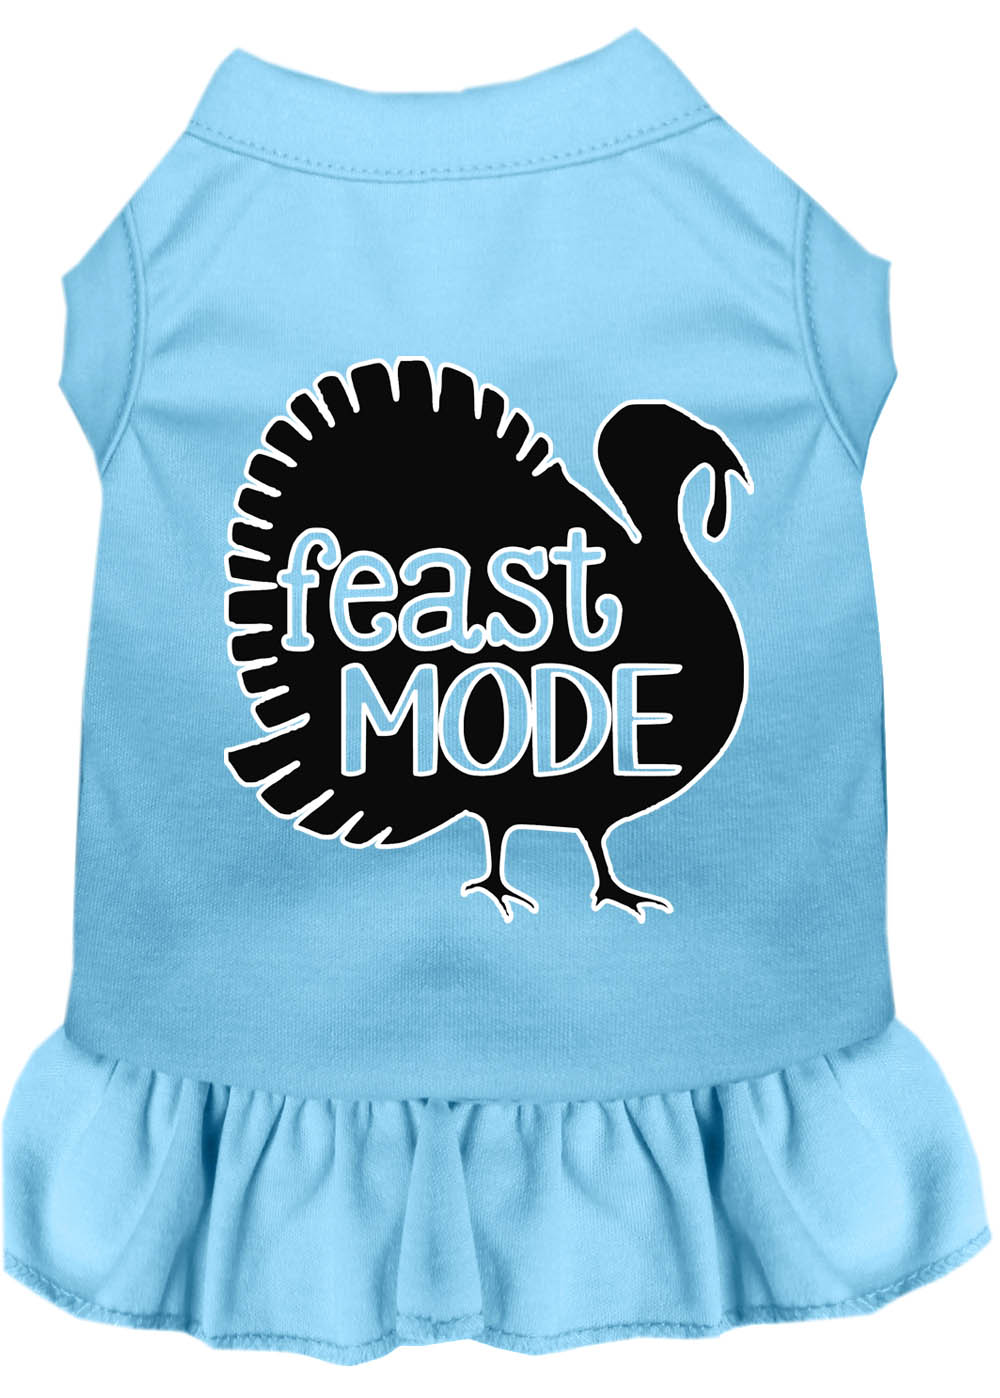 Feast Mode Screen Print Dog Dress Baby Blue XS